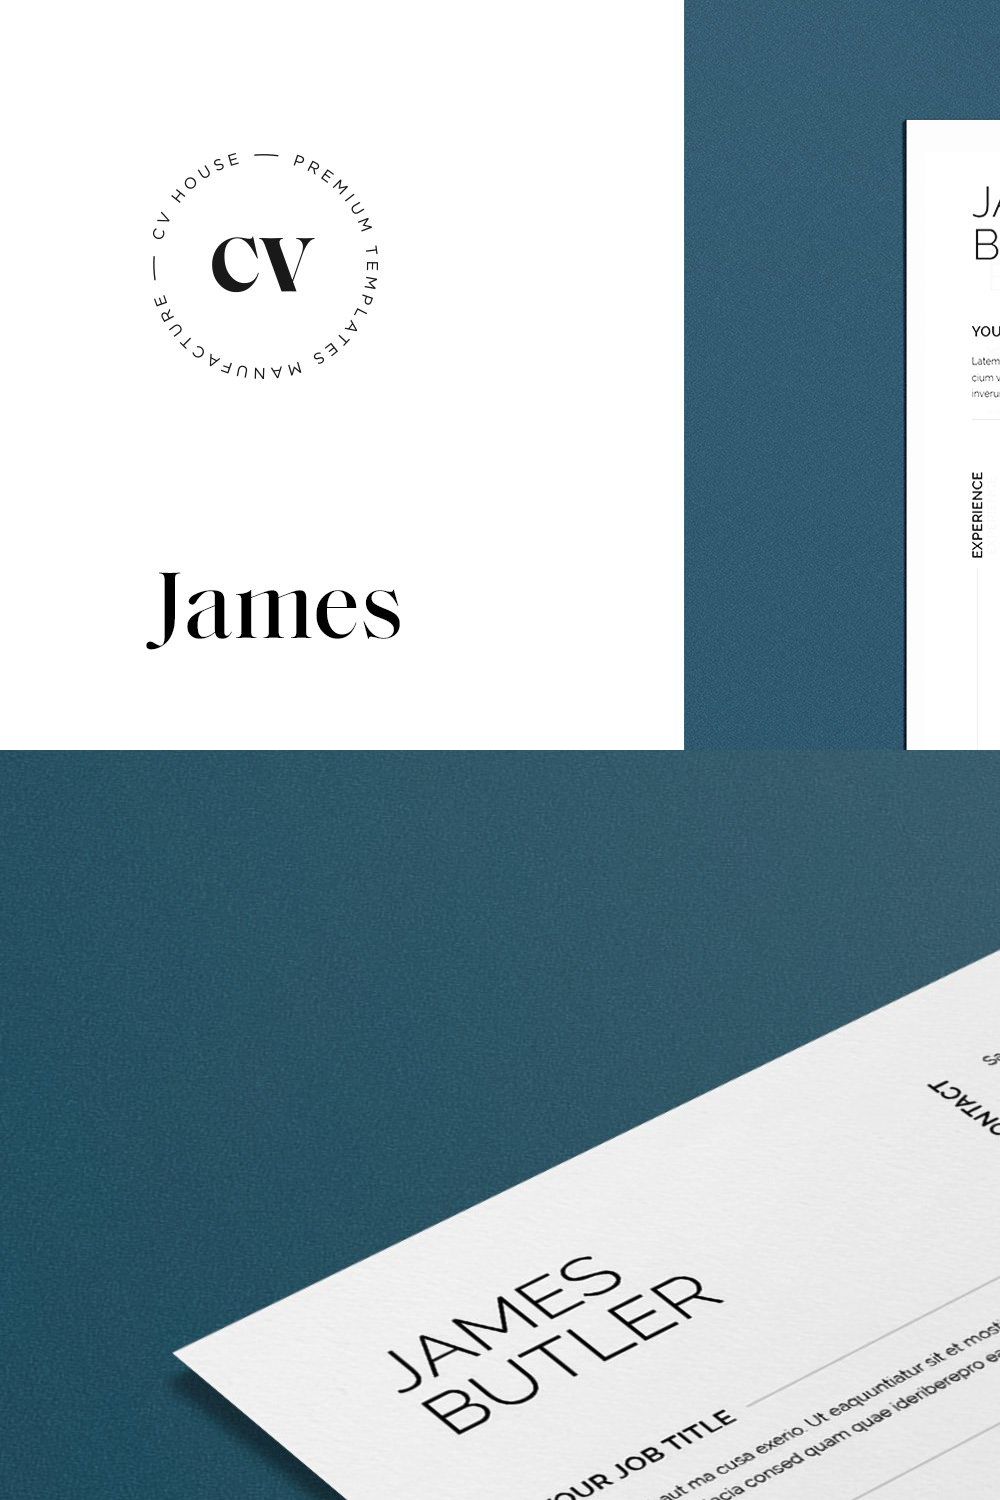 James | CV / resume template pinterest preview image.